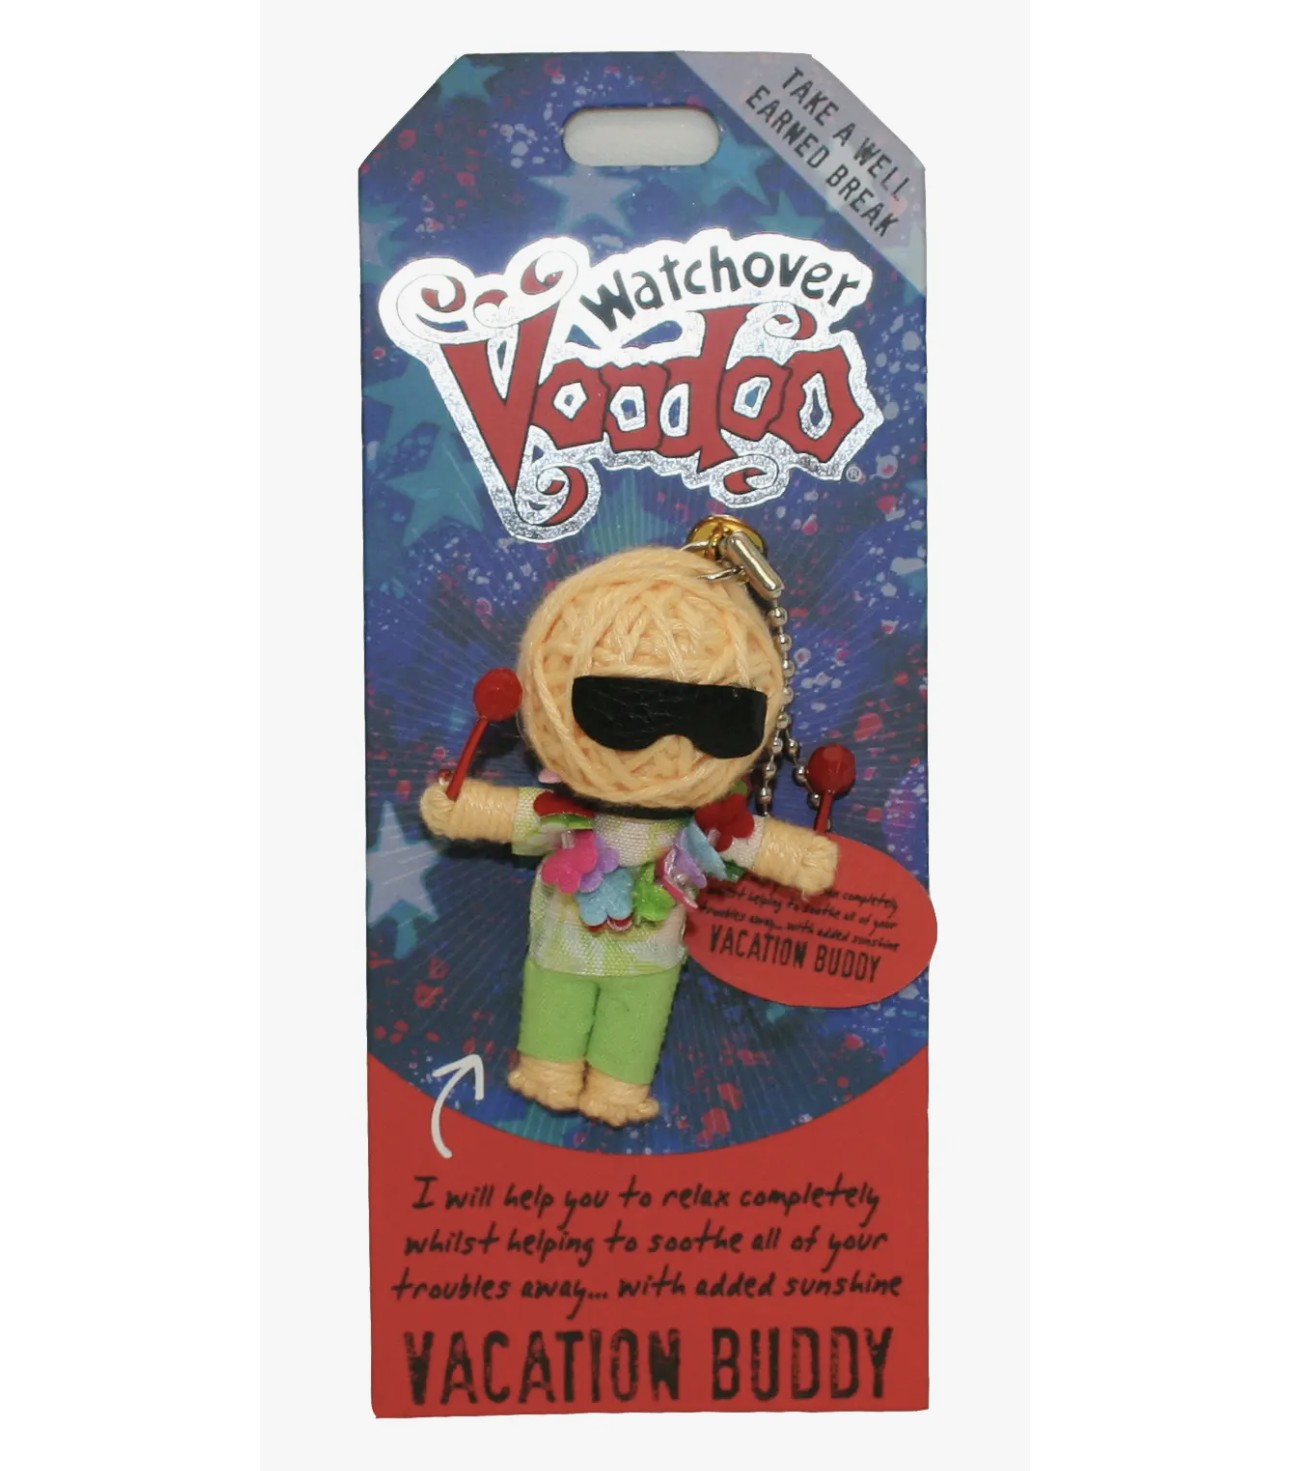 Vacation Buddy Voodoo Doll